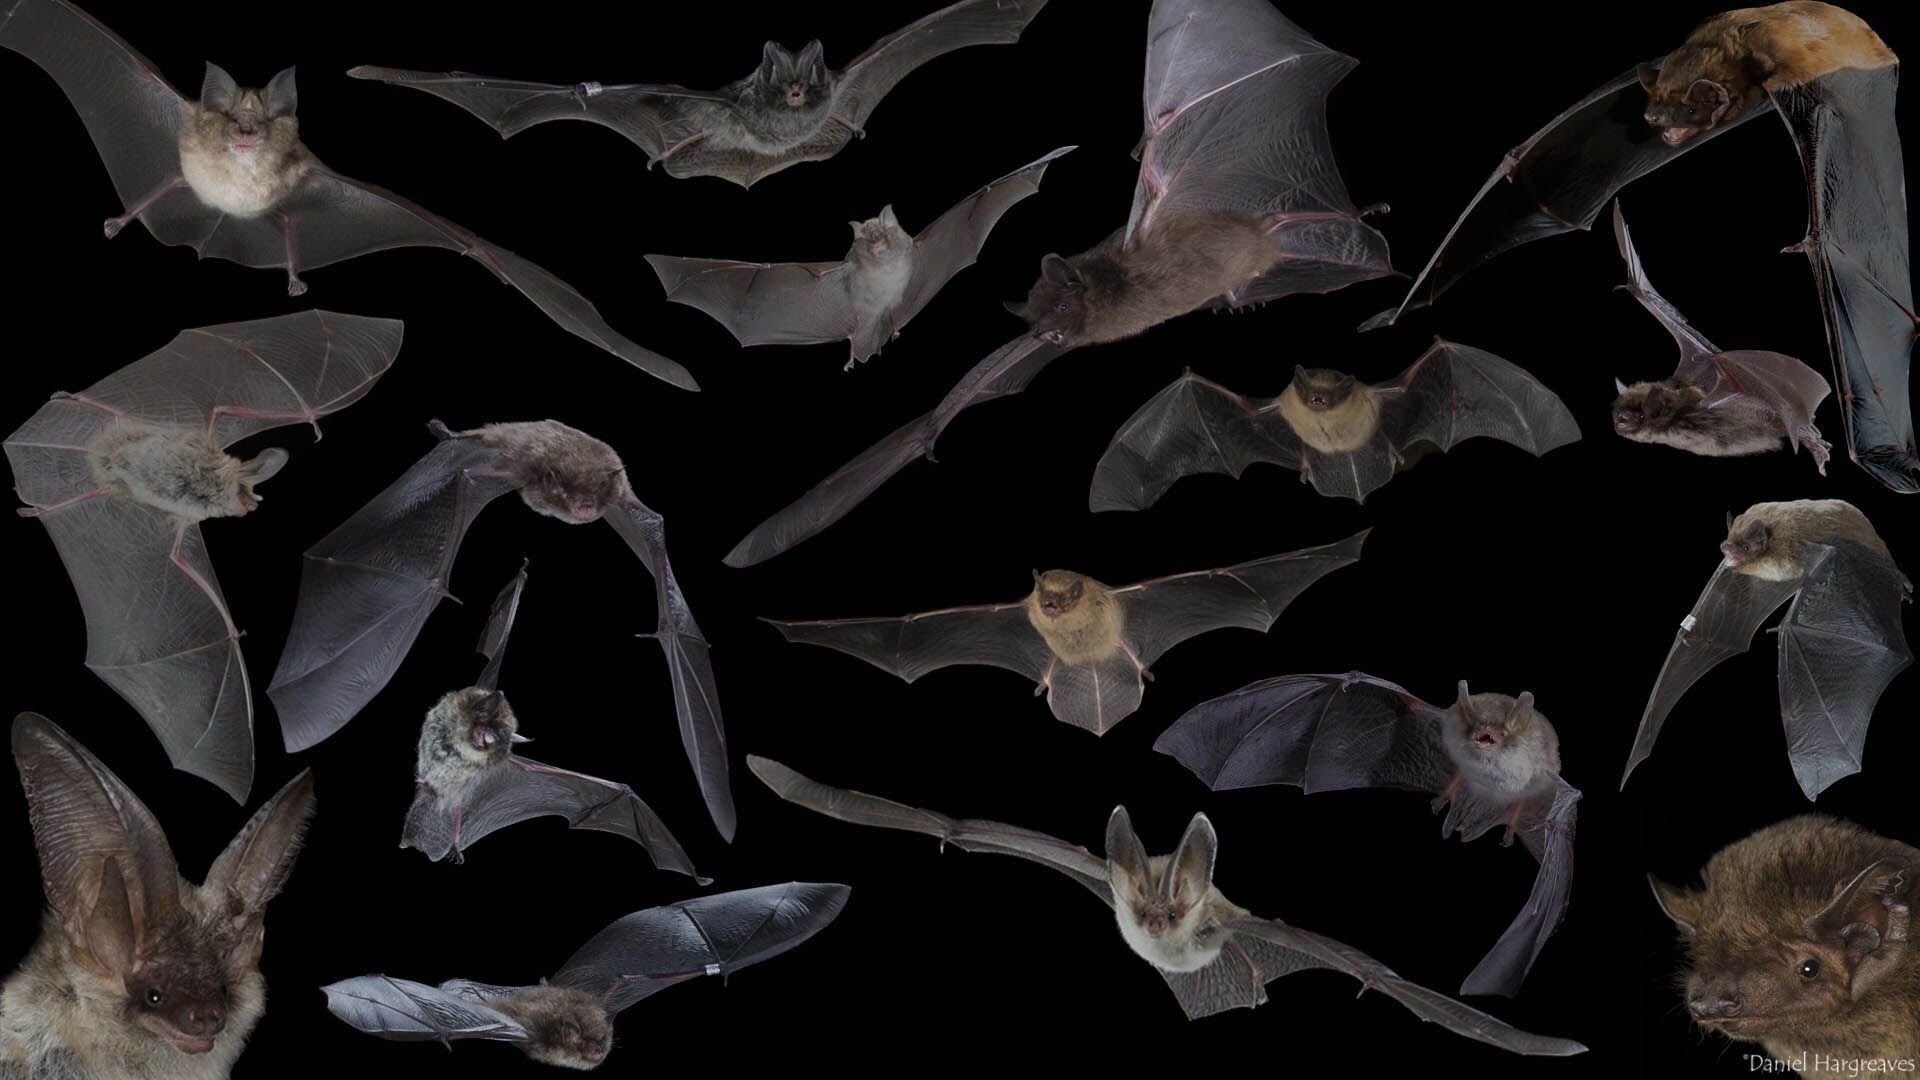 Son un animal fascinante para estudiar (Crédito Bat Conservation Trust)